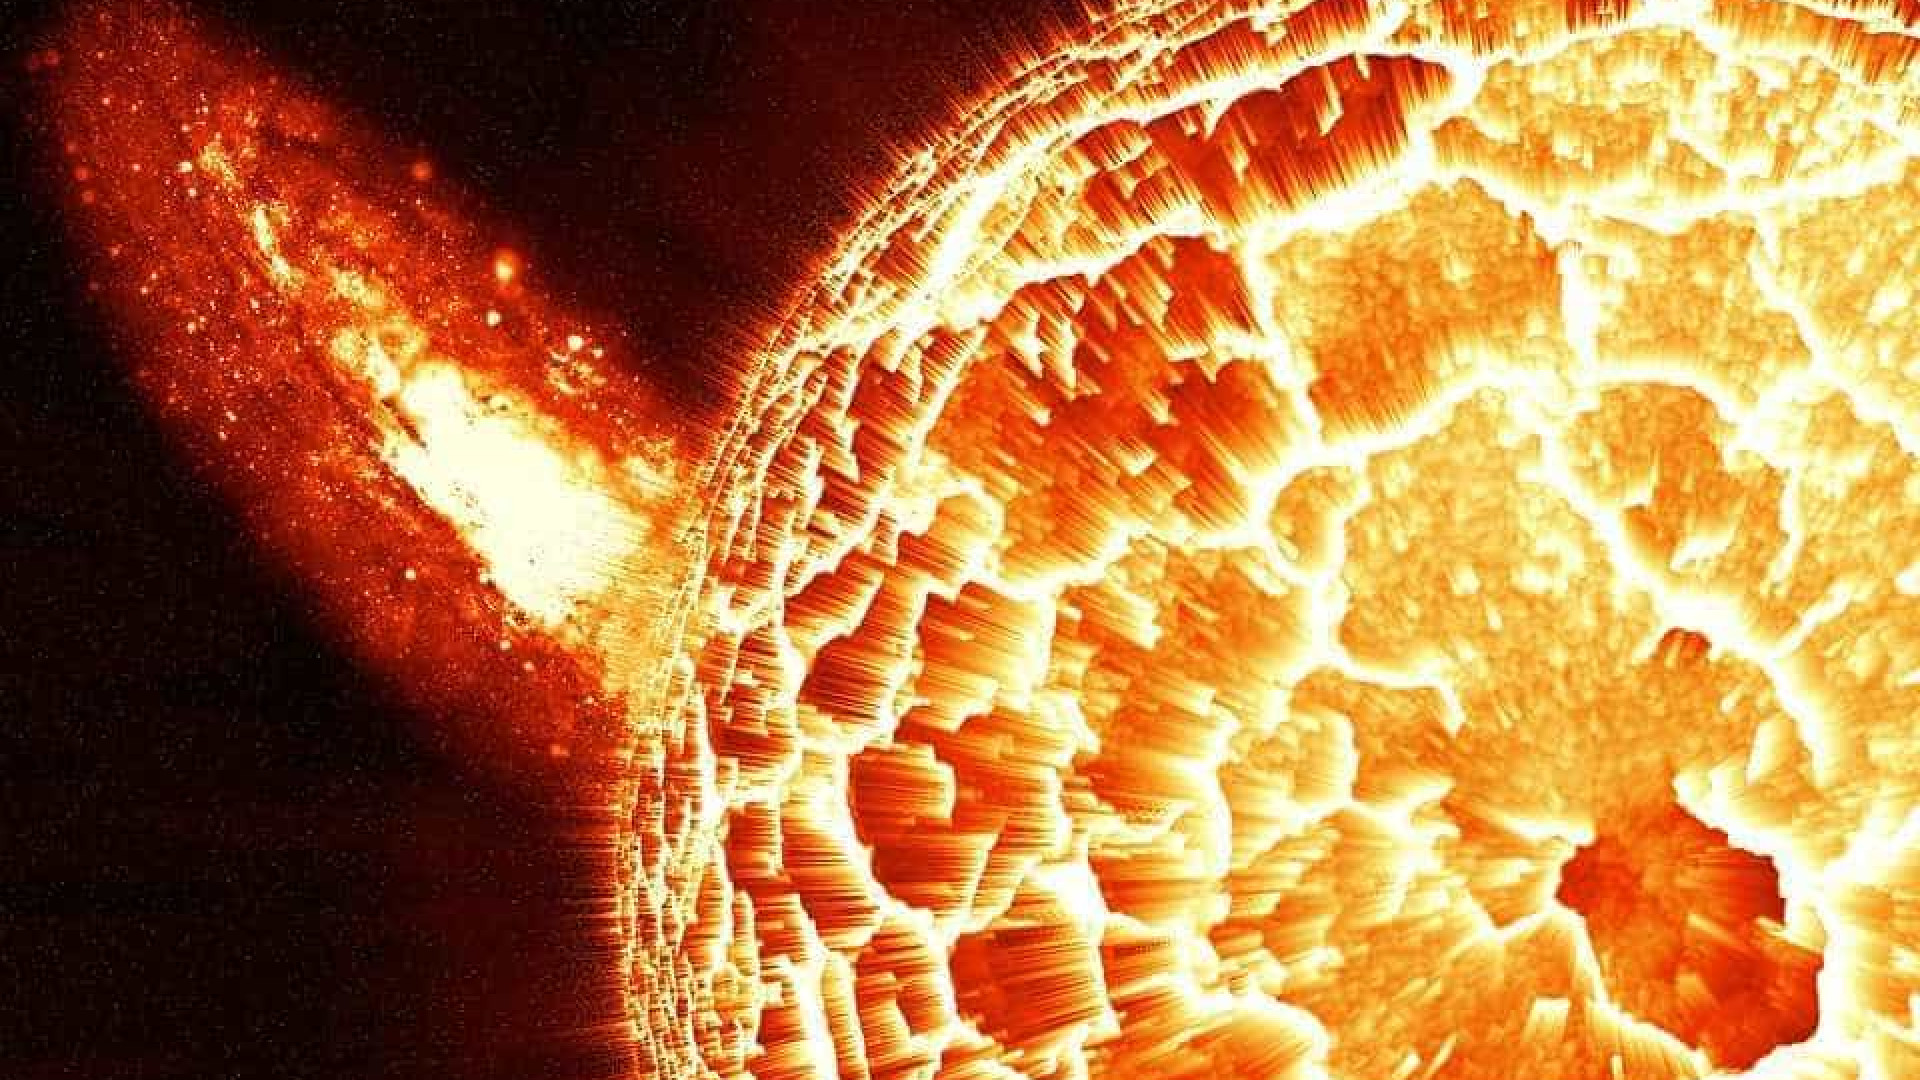 Cenário apocalíptico: sol consumirá a Terra, destruindo sistema solar